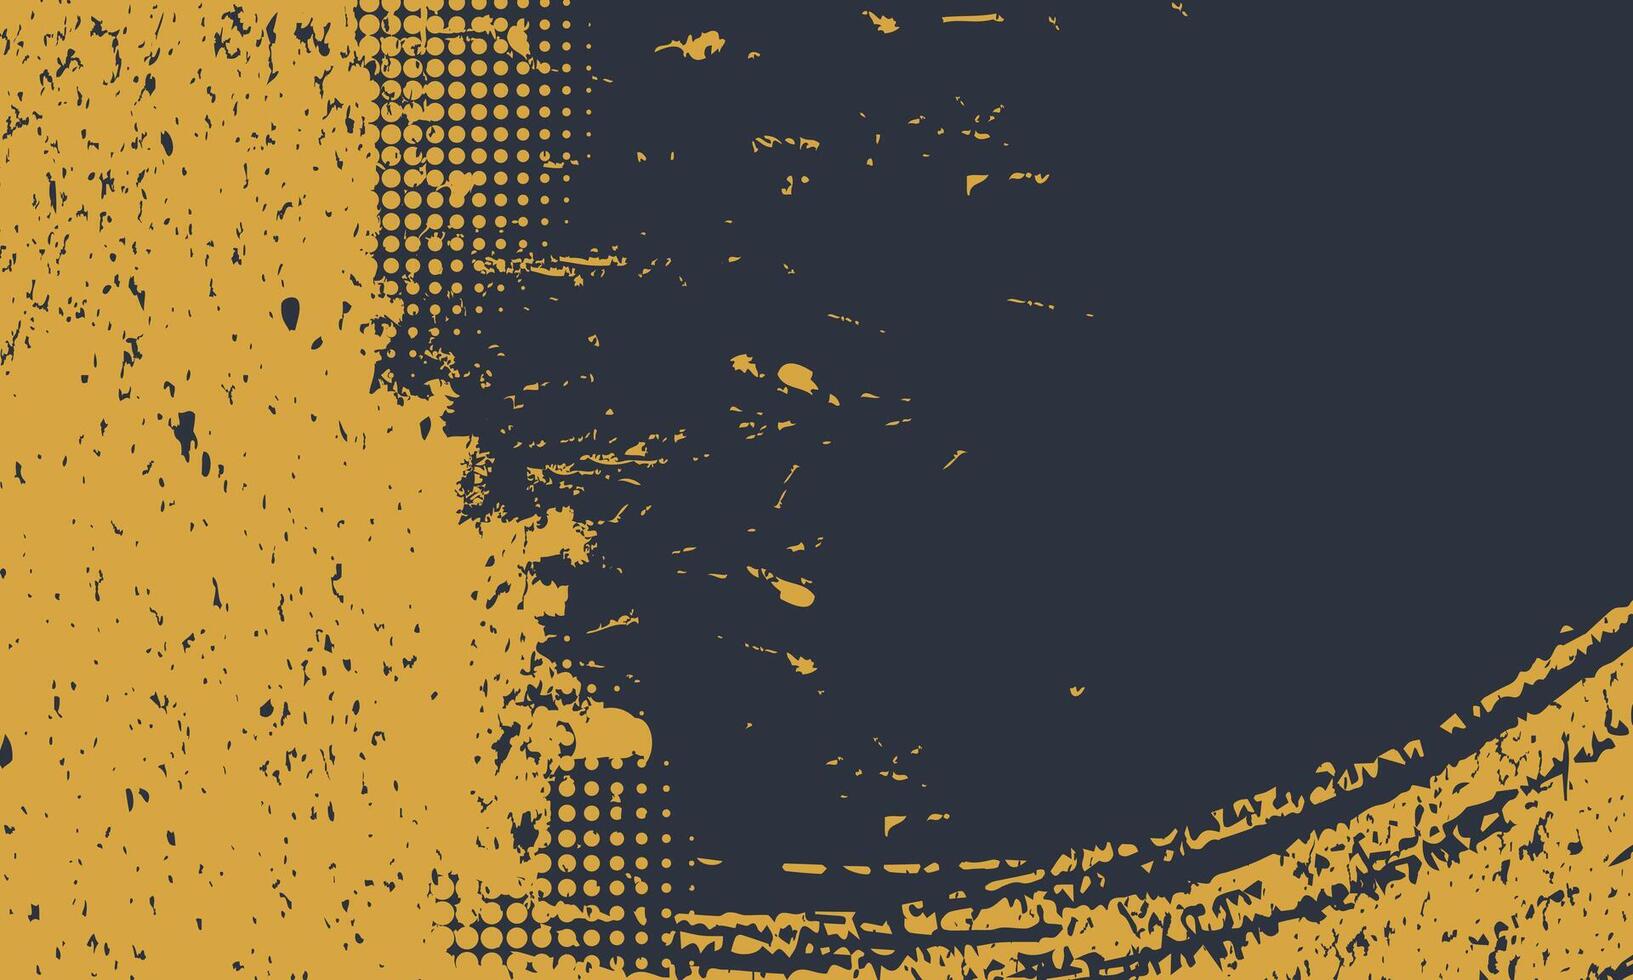 Grunge style brush stroke textured background vector